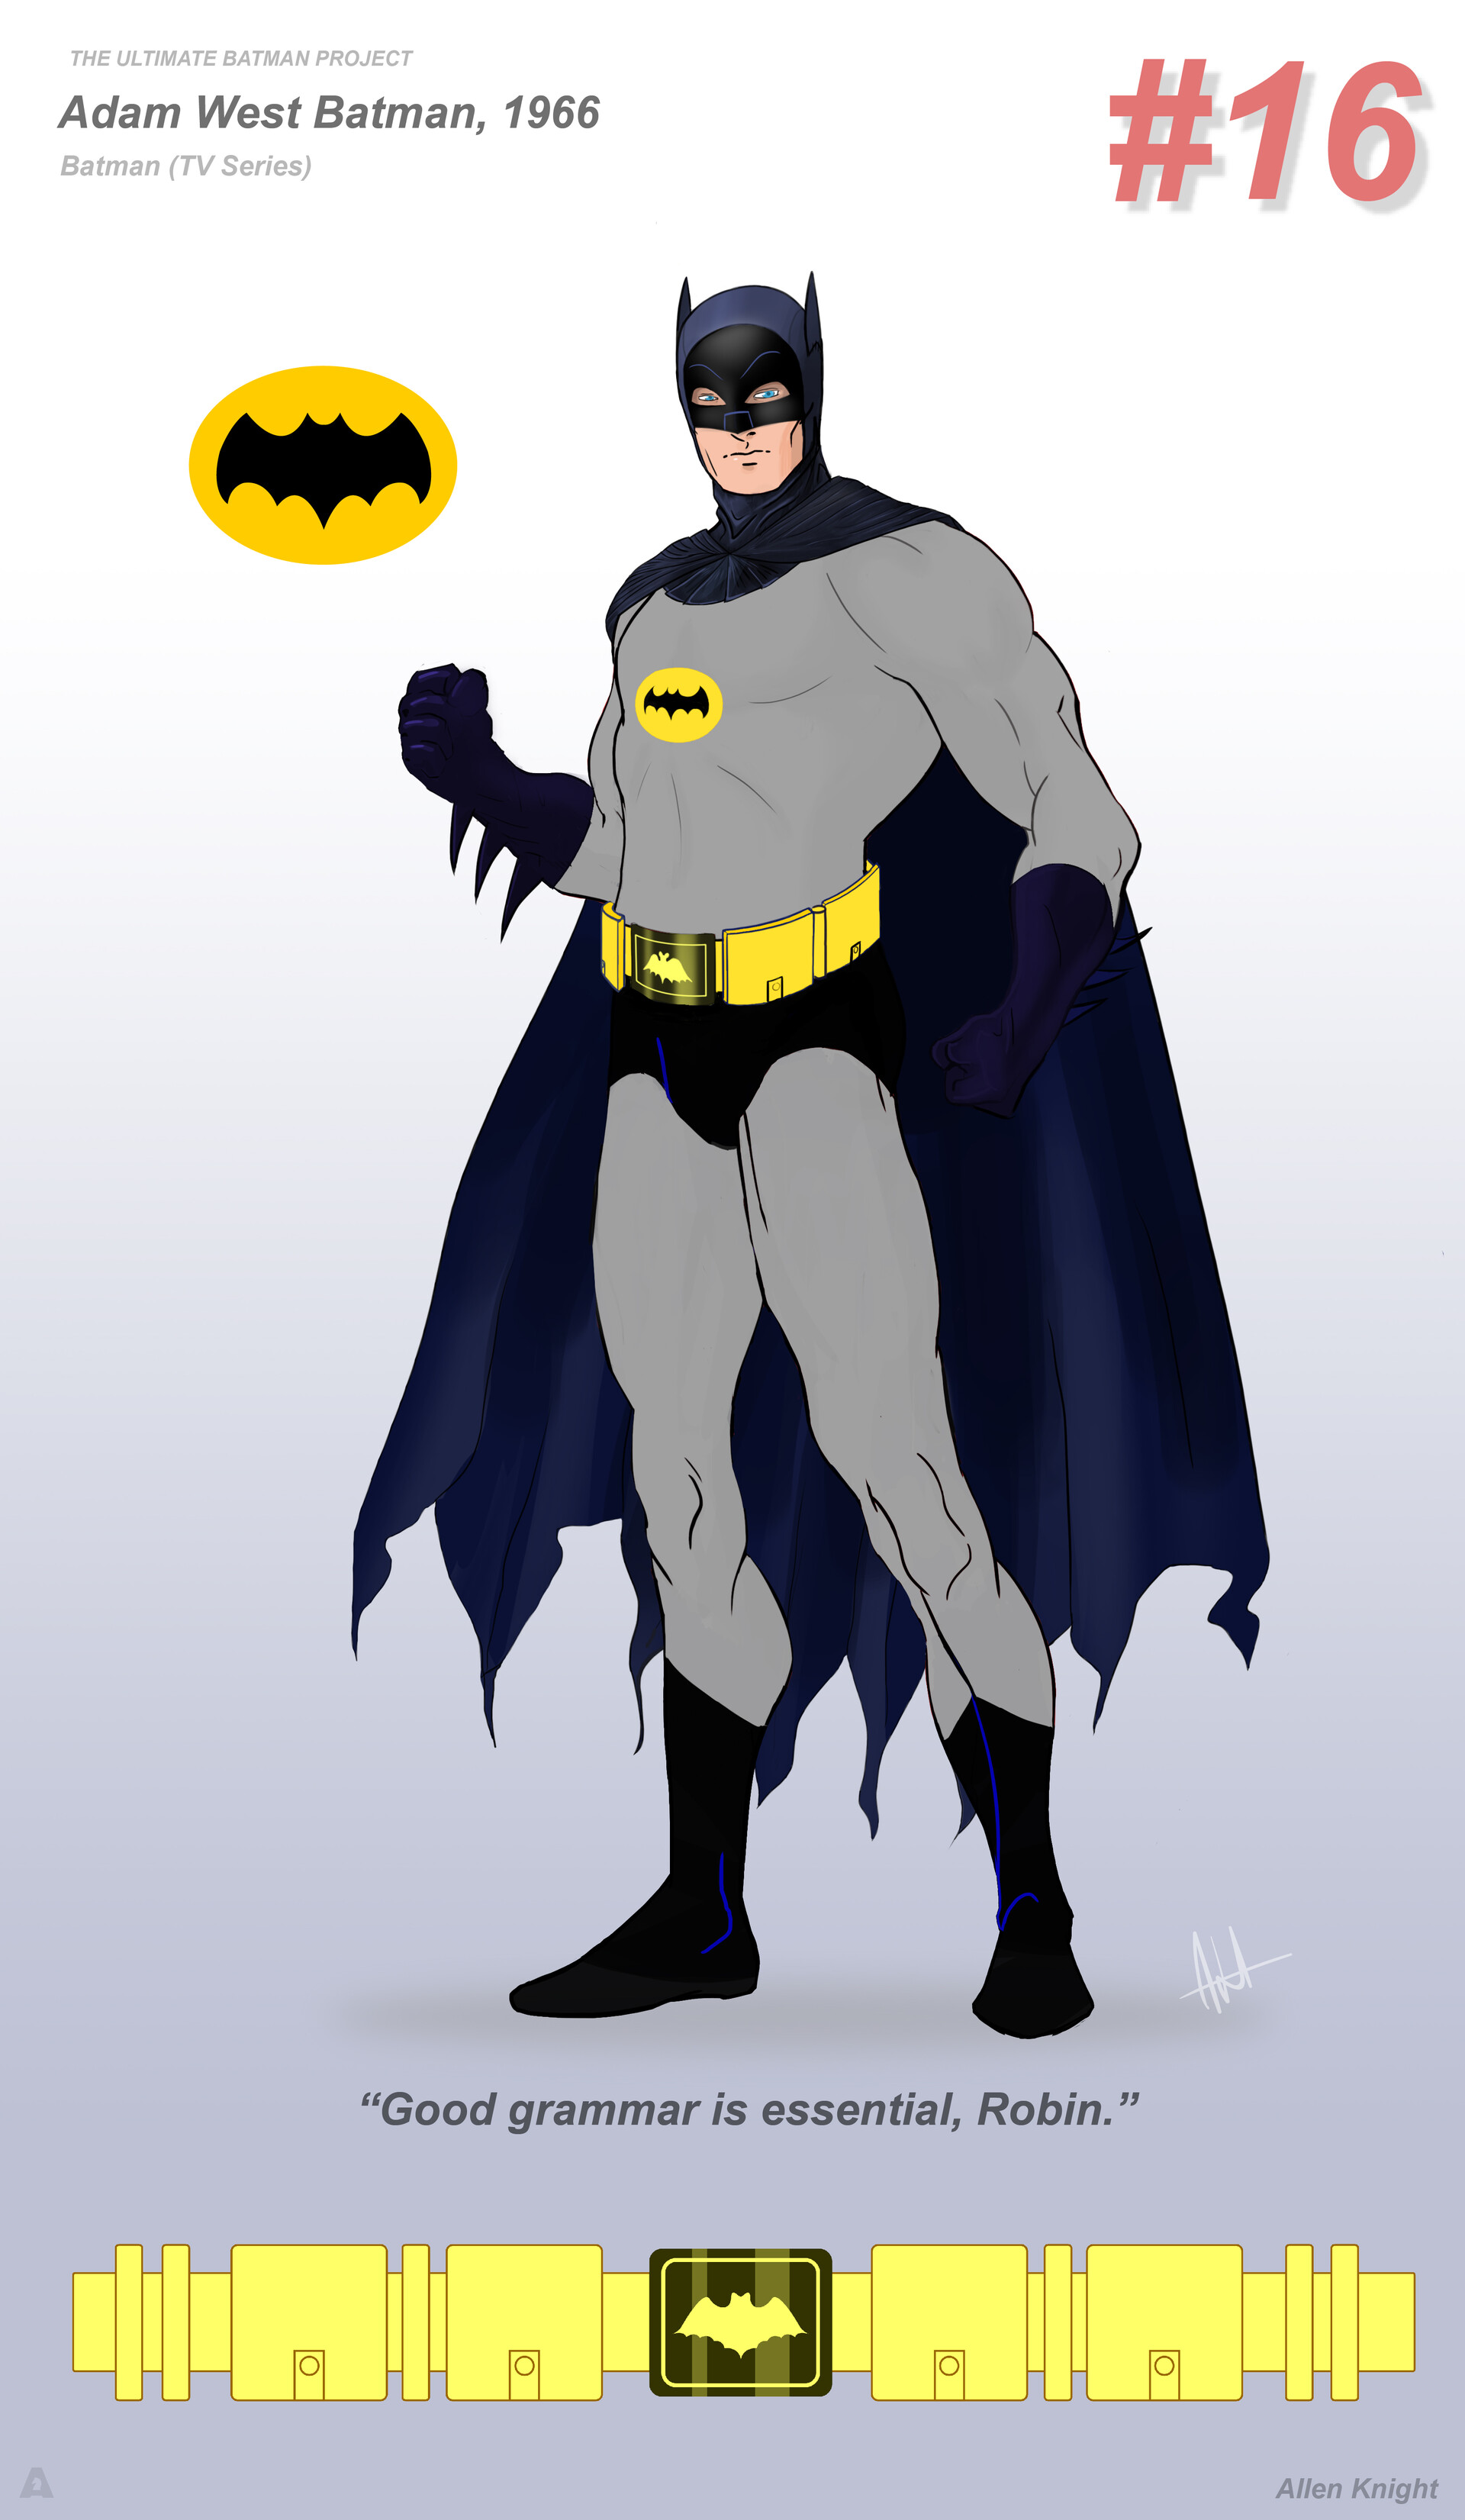 ArtStation - The Ultimate Batman Project: Costume #16 - Adam West Batman